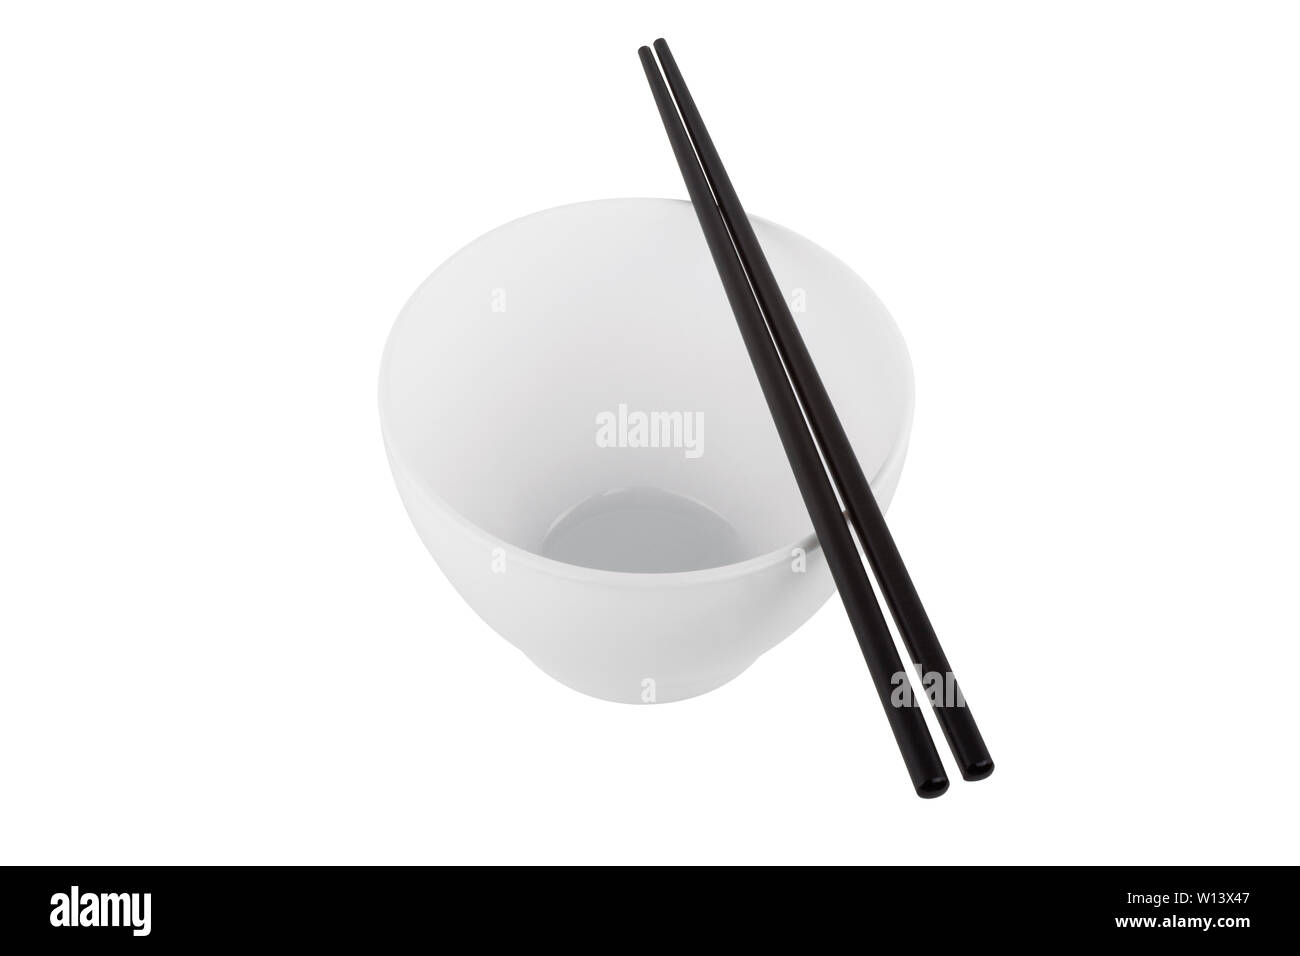 White bowl with chopsticks isolated on white background Stock Photo